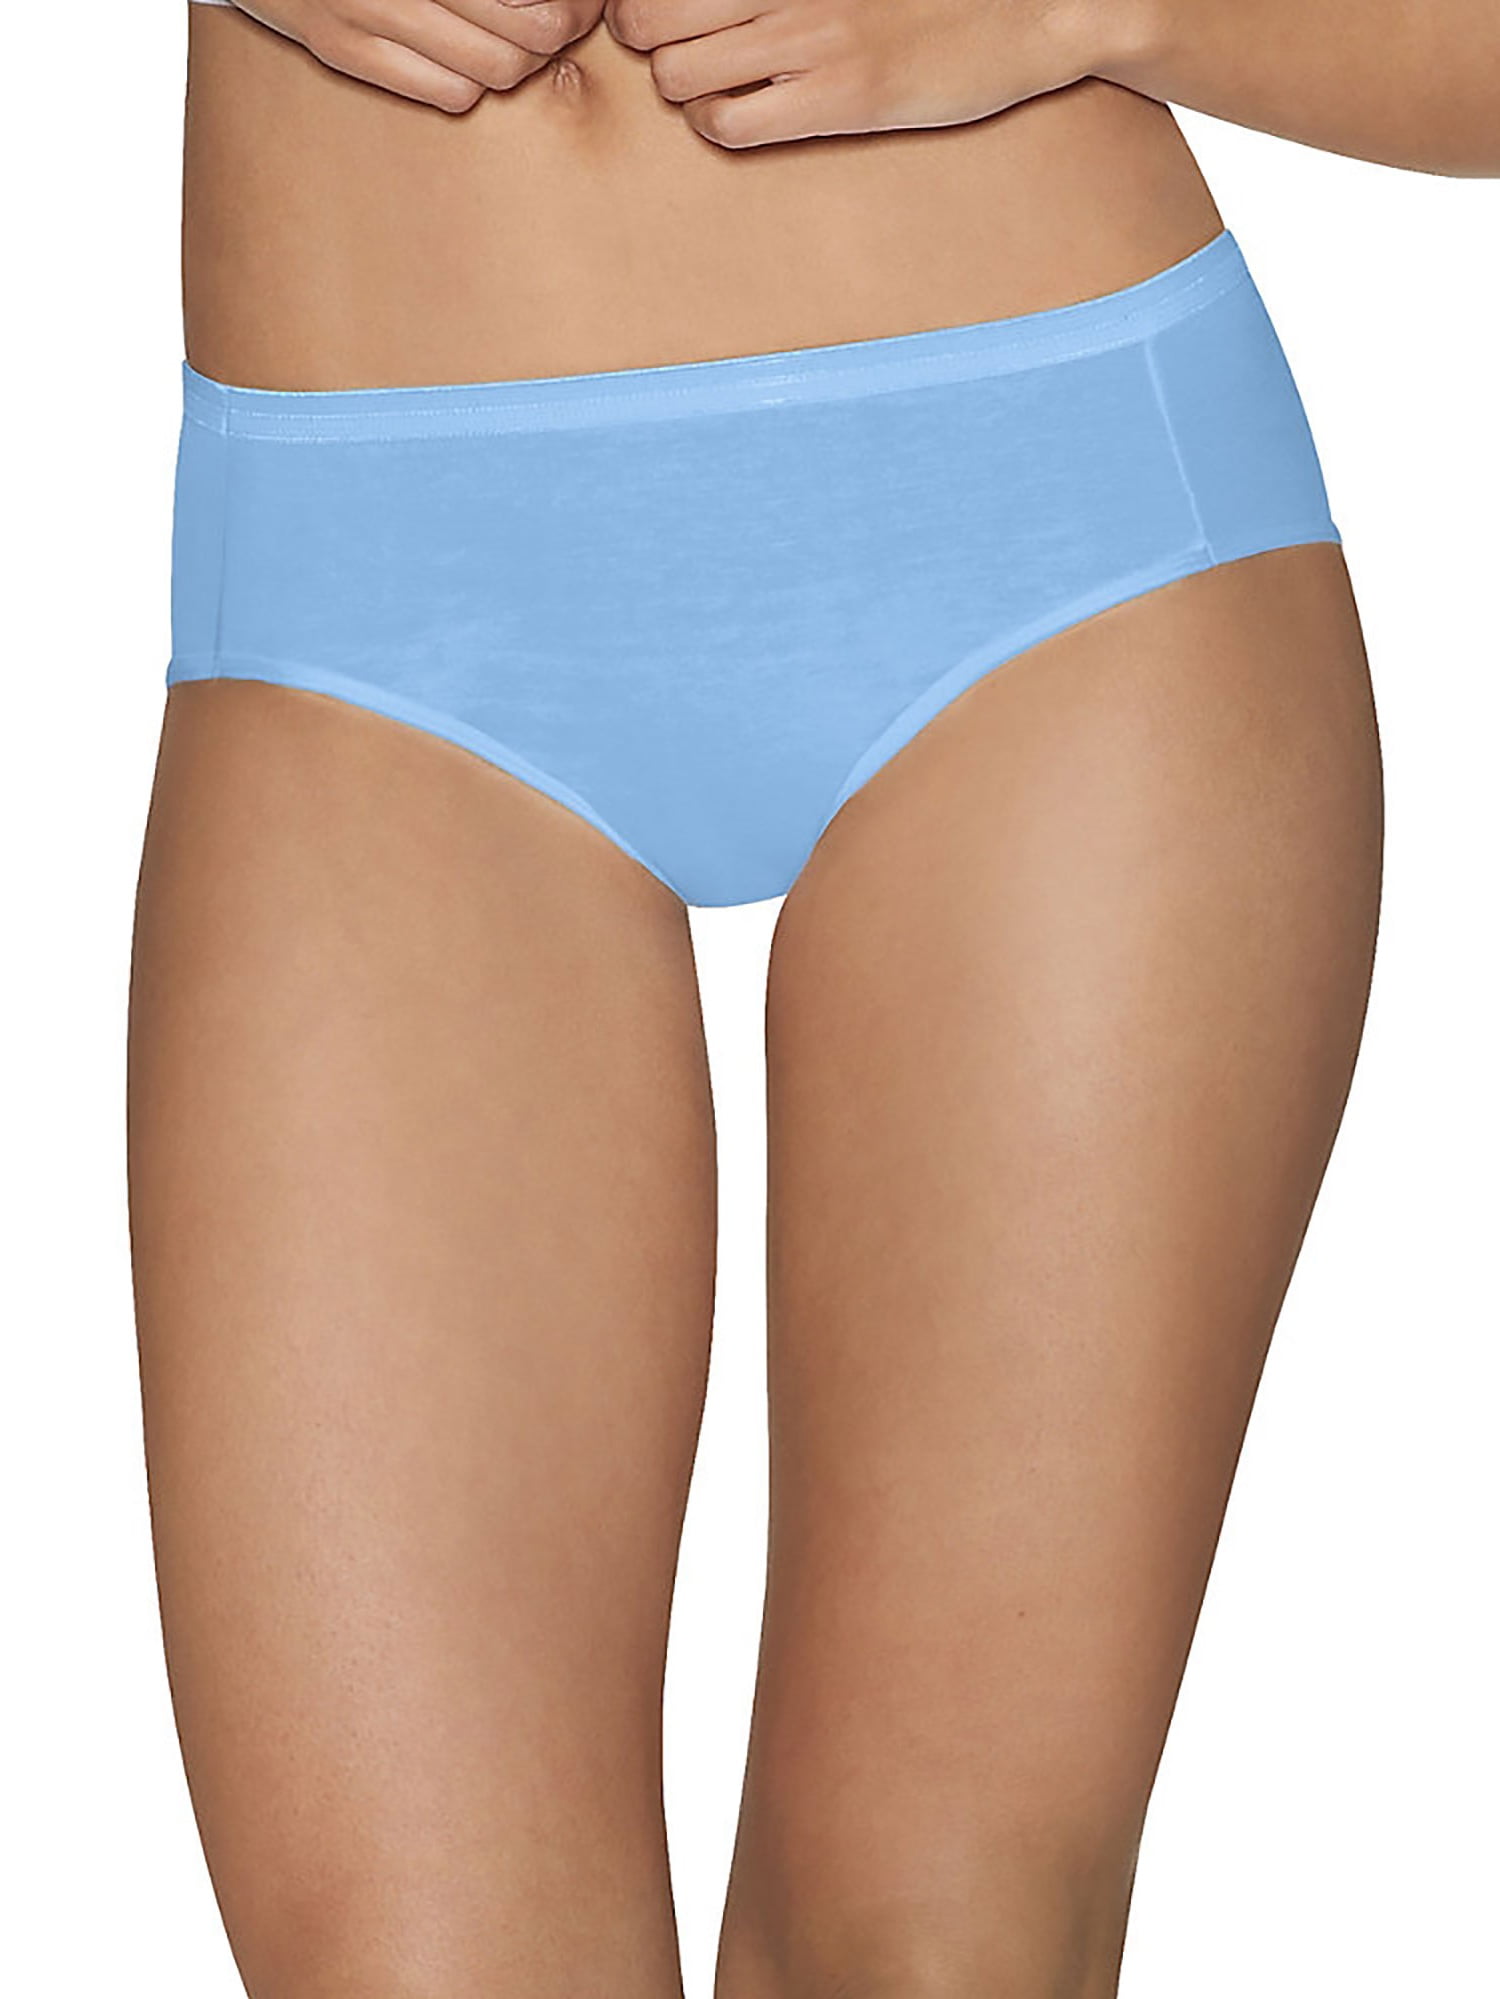 Hanes Ultimate Women's Breathable Brief Underwear, 6-Pack Sugar